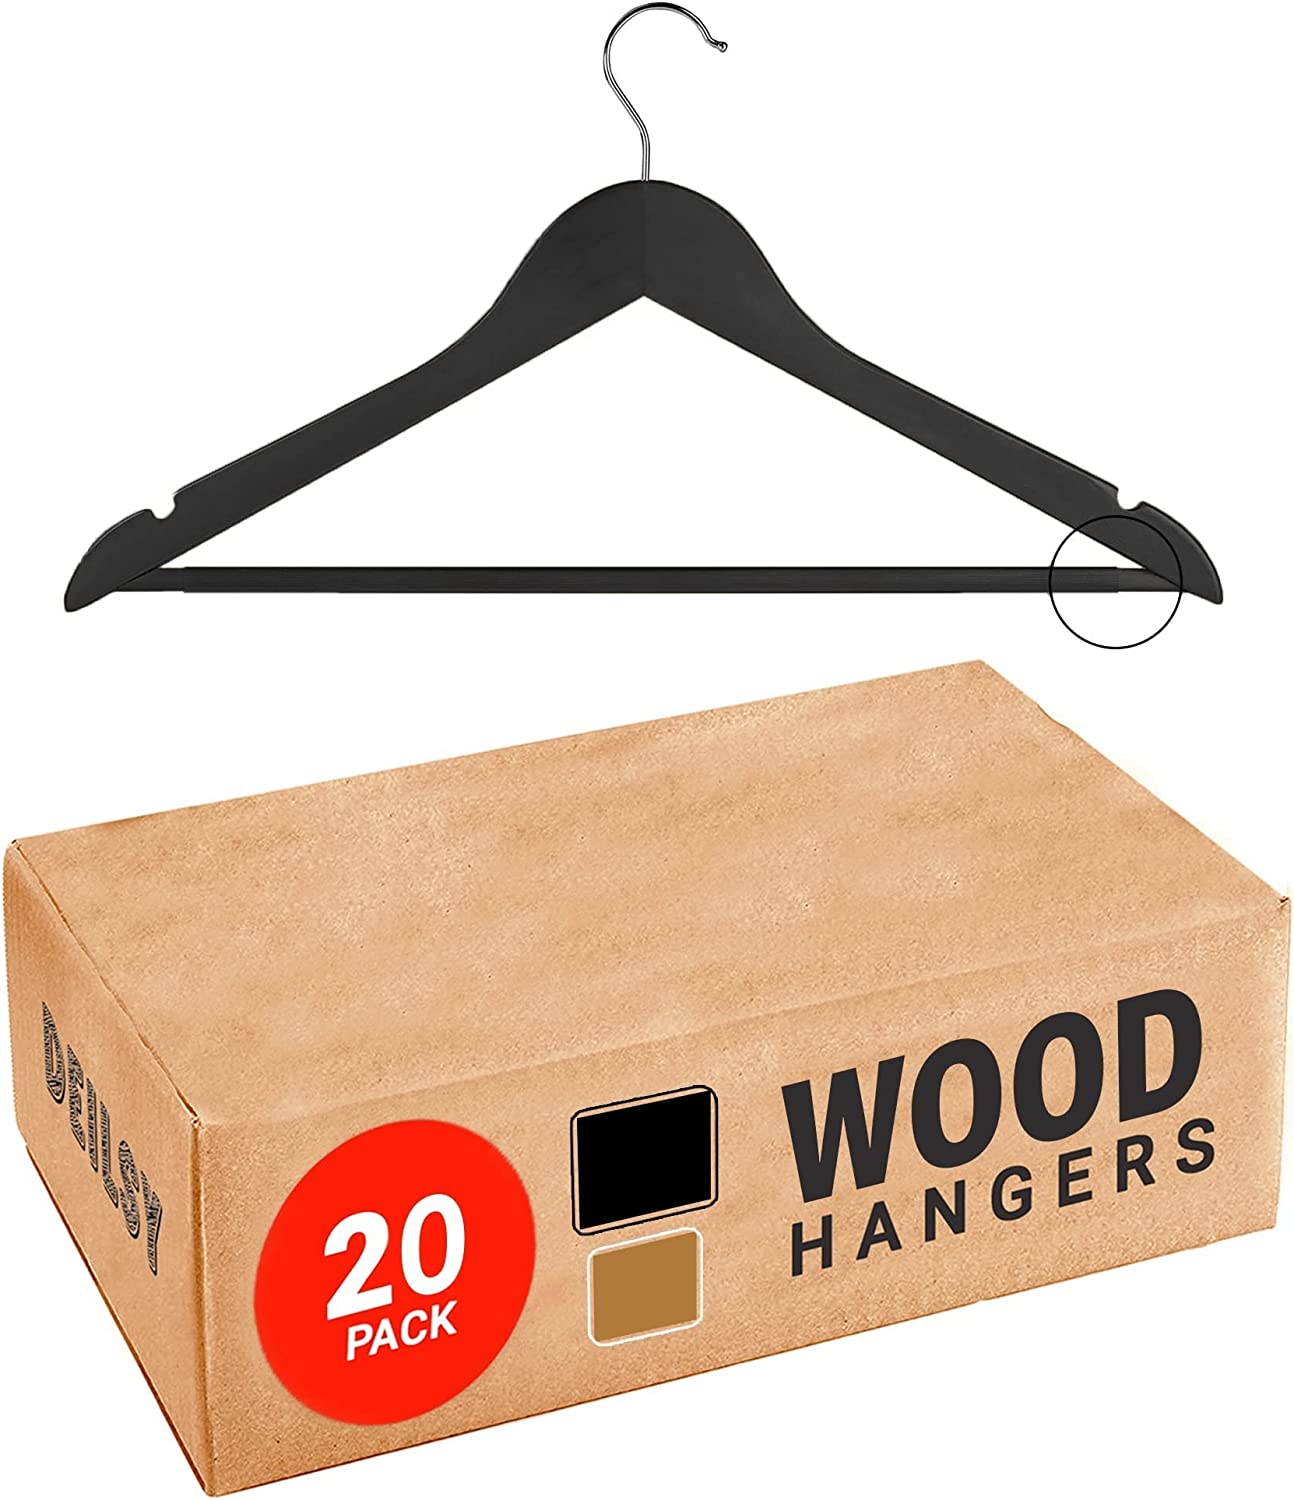 Black Wooden Hangers Heavy Duty Suit Hangers with 360° Swivel Hook Wood Hangers Fancy Hangers Clothes Hanger Perfect for Shirt, Coat, Suit, Jacket, Skirts, Pants Hangers Pack of 20